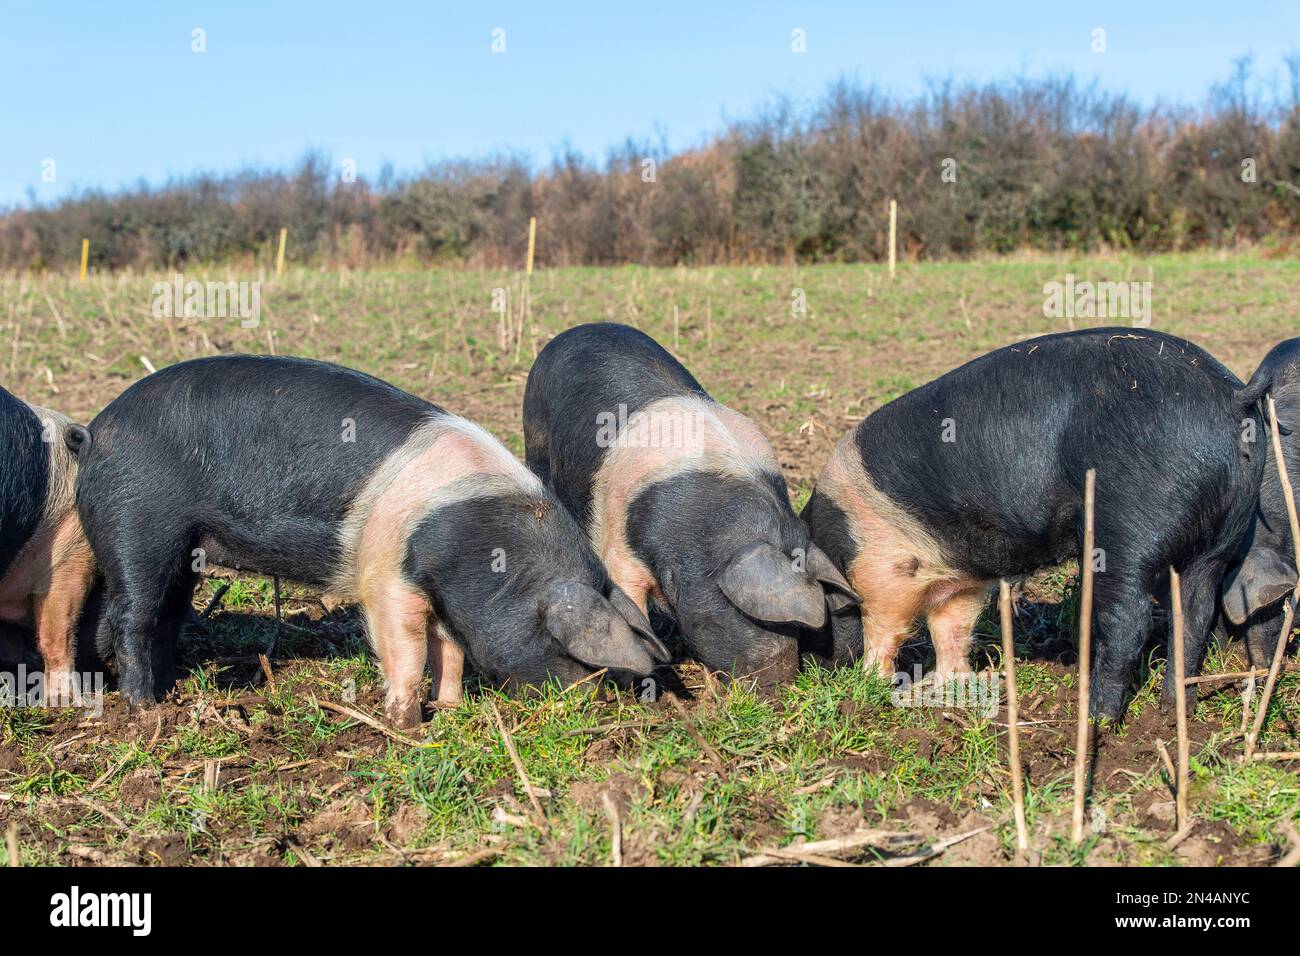 saddleback weaner pigs outdoors Stock Photo